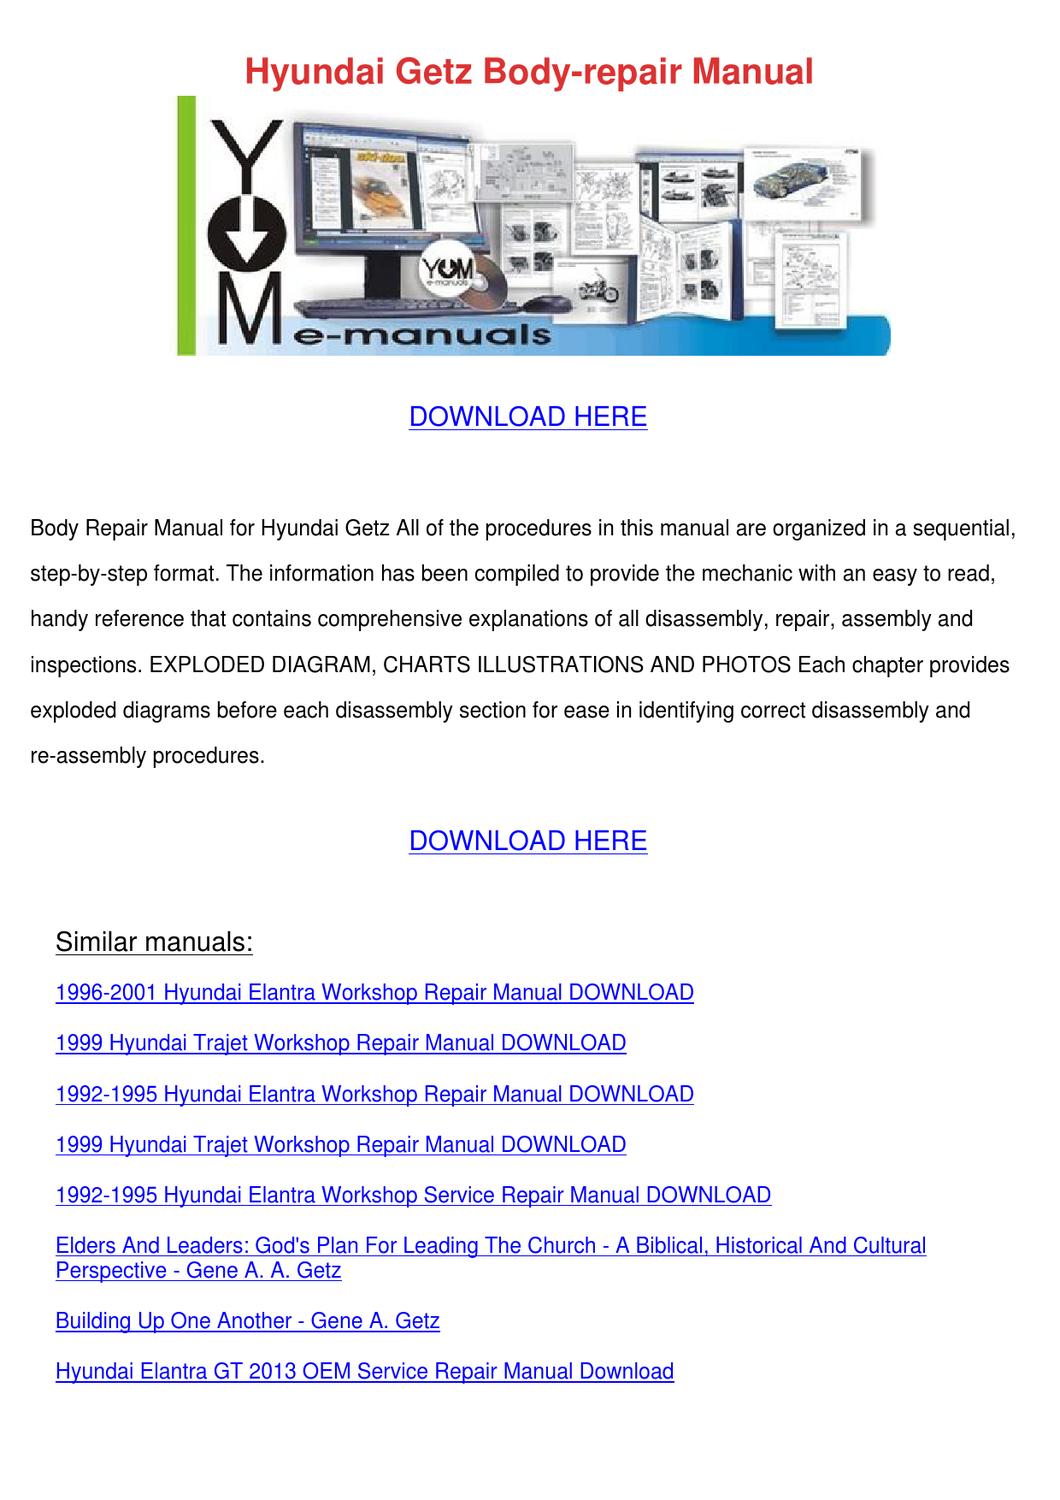 Hyundai Getz Service Manual Free Download